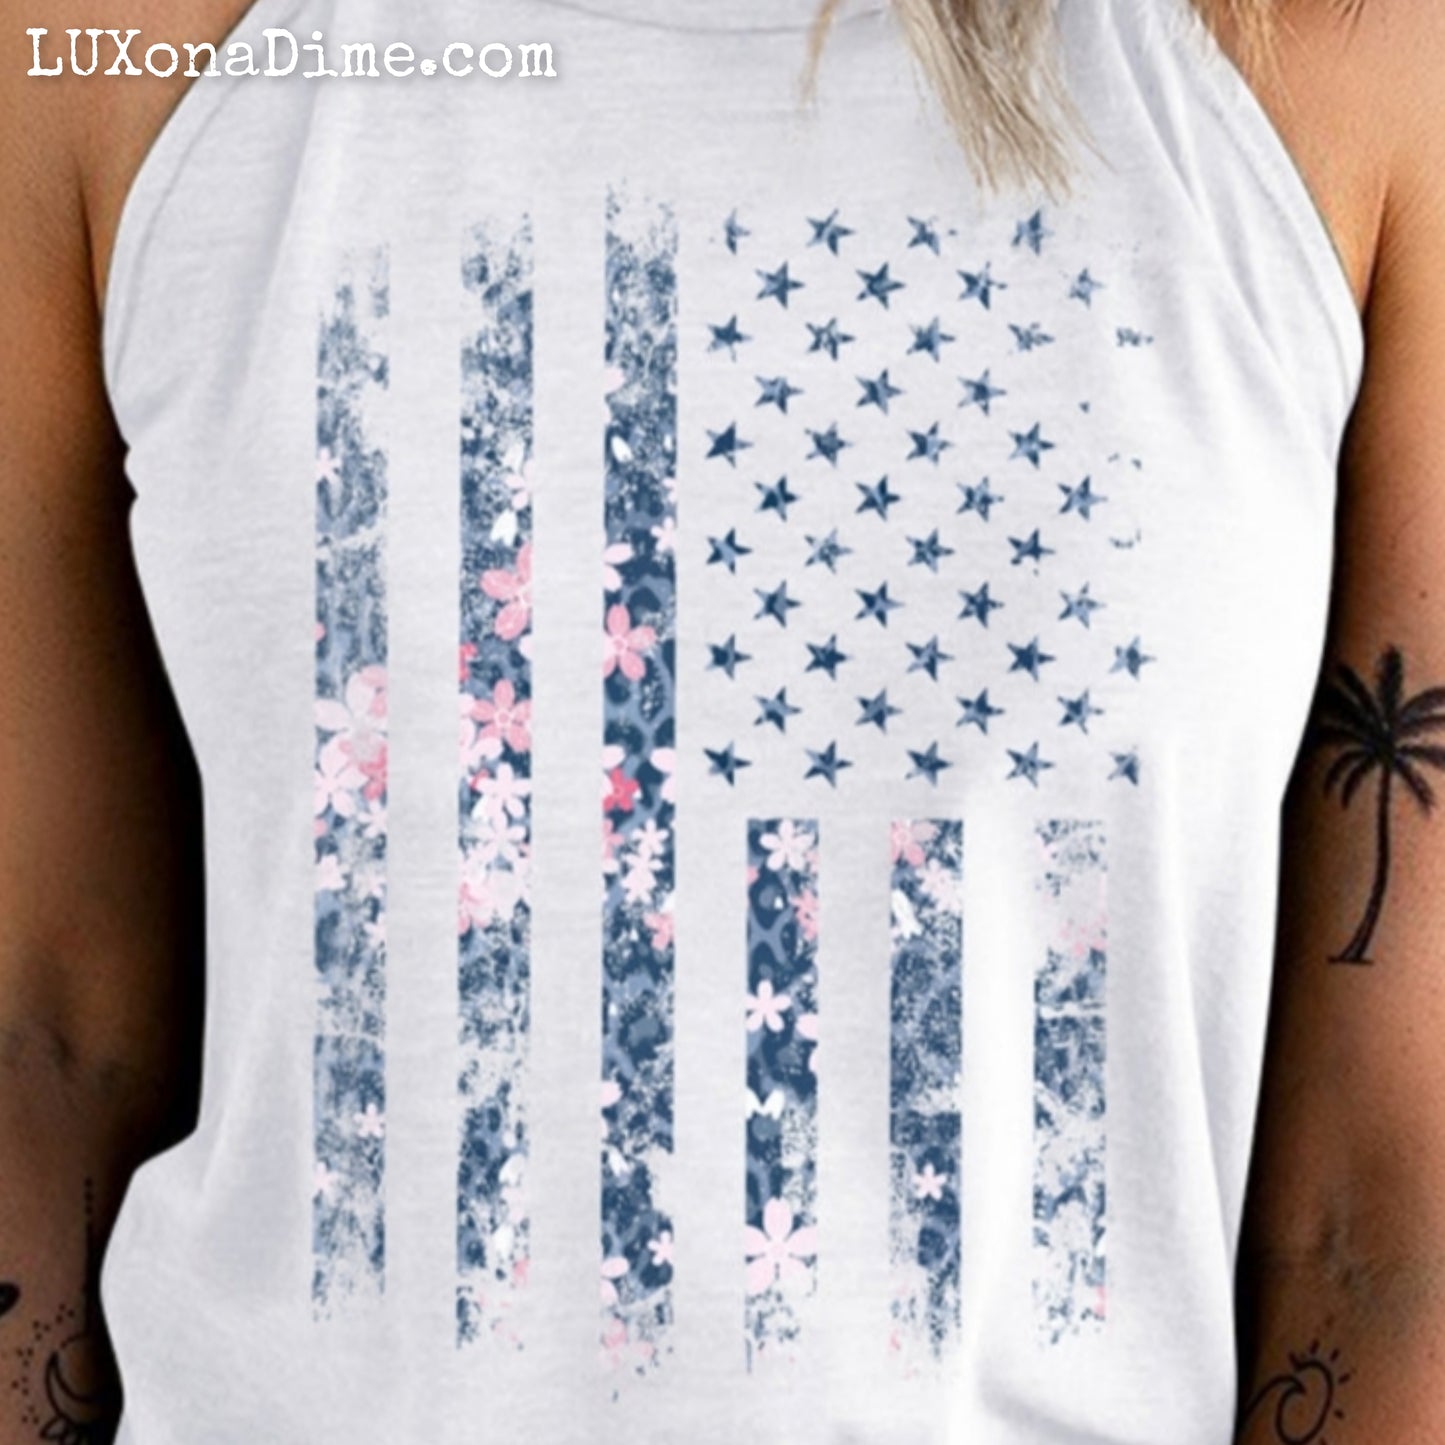 American Flag Floral Graphic Shirt Patriotic Sleeveless Grecian Tank Top